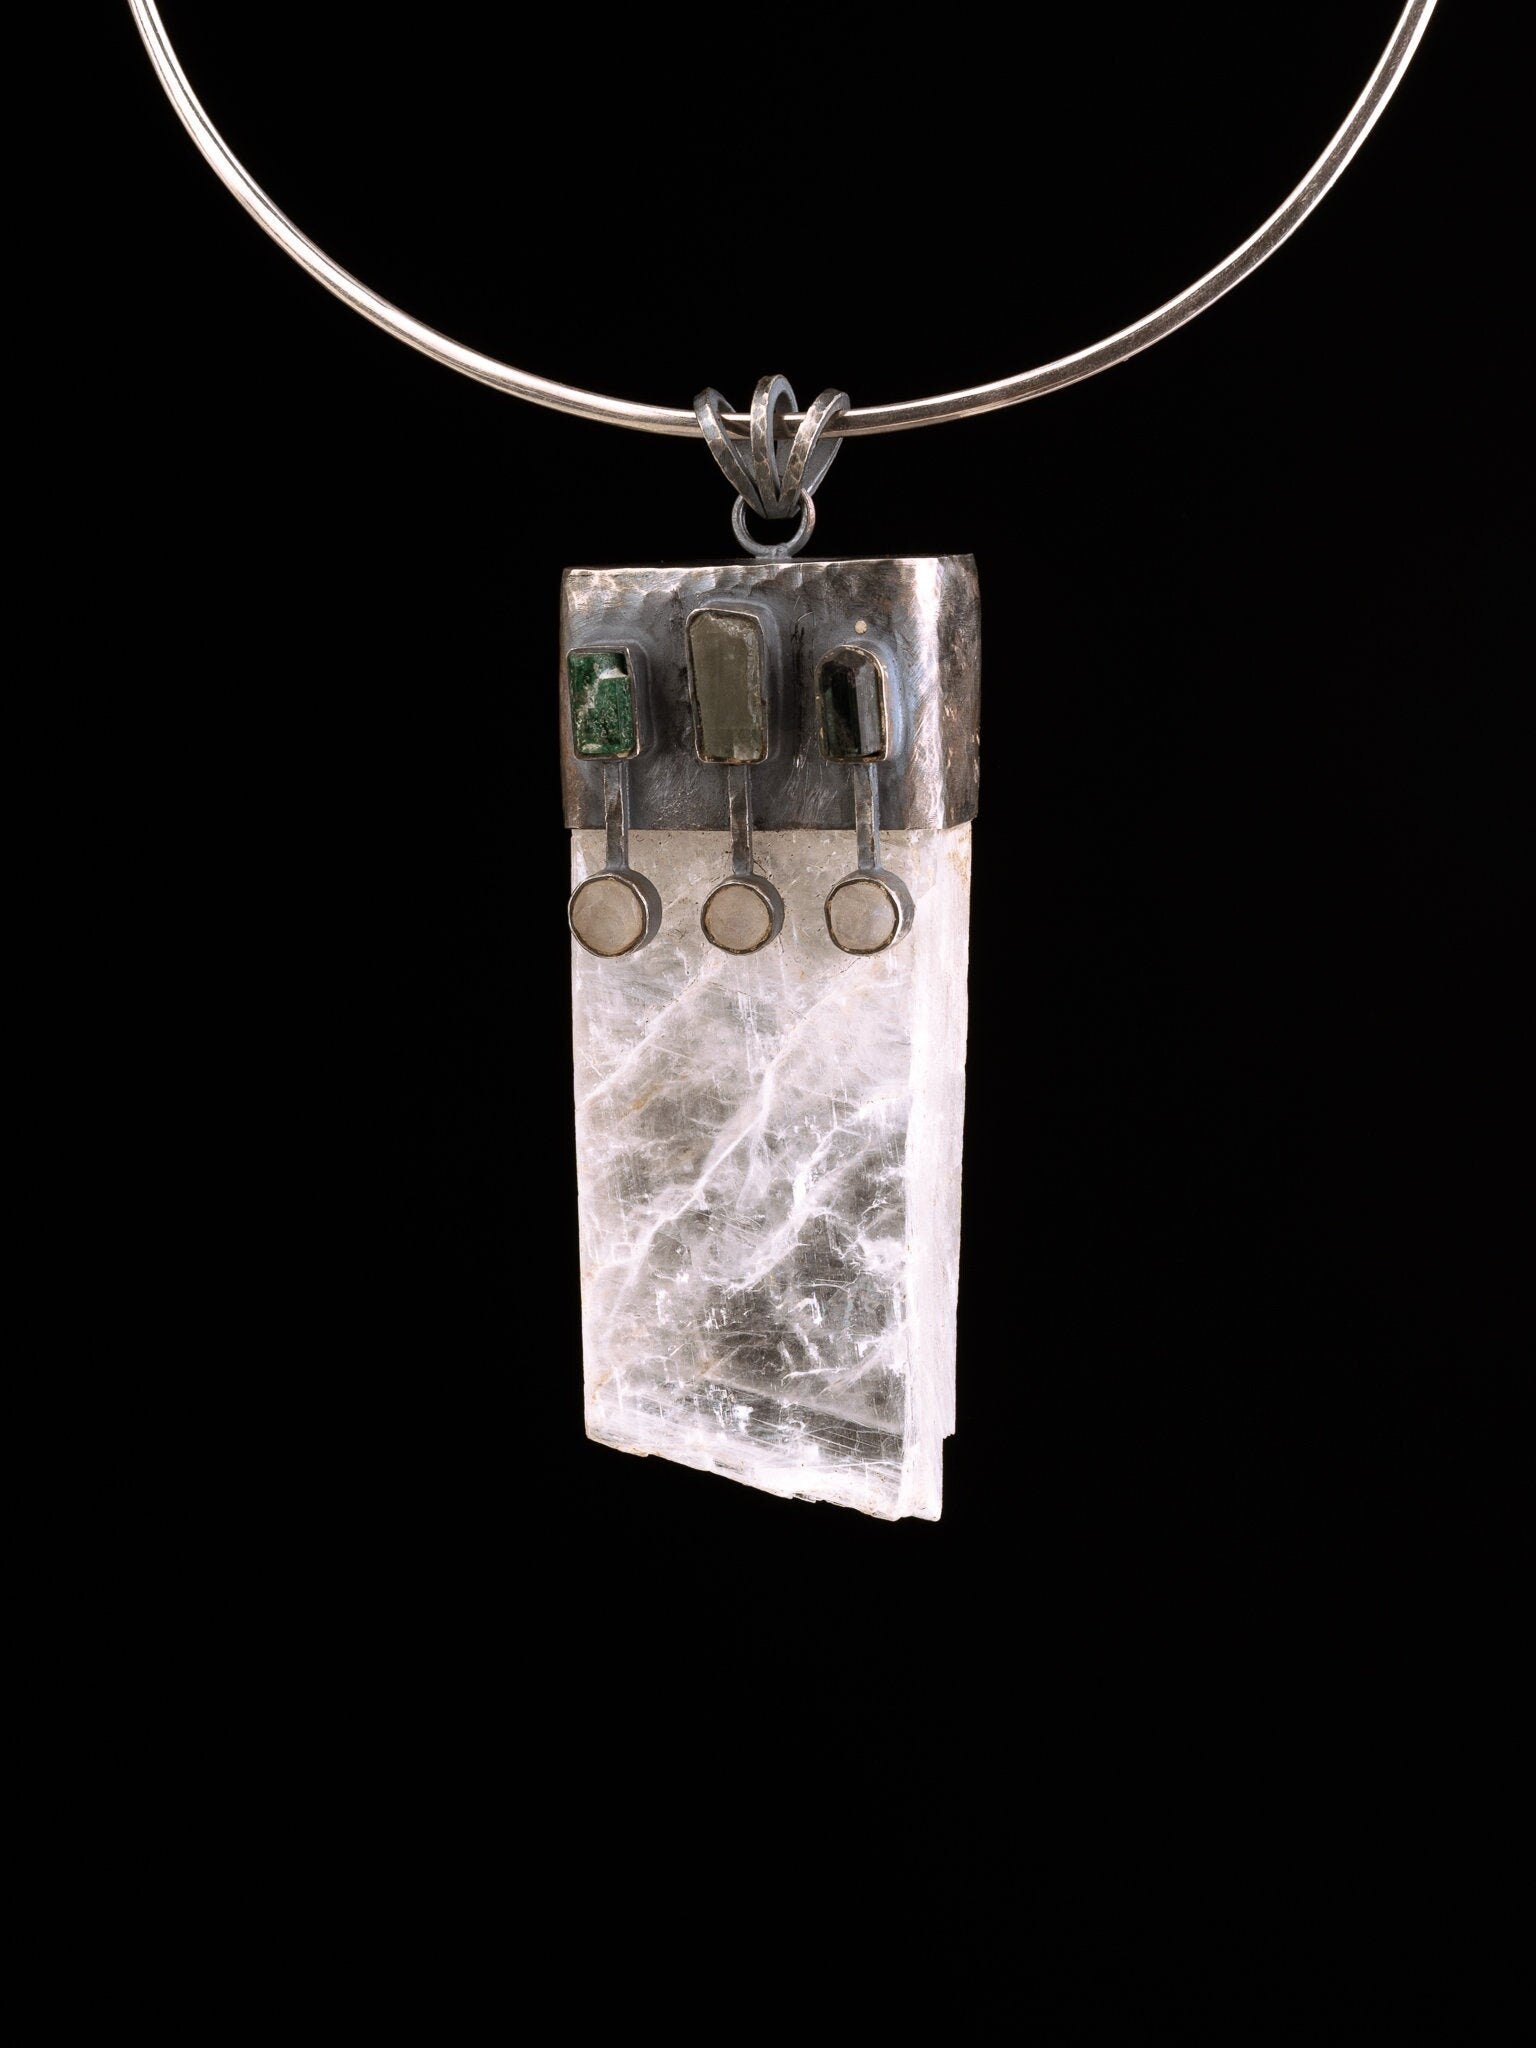 Emerald, Aquamarine, Blue tourmaline & Moonstone prized atop a chuck of optical Selenite - Sterling Silver - Rustic Finish - Pendant